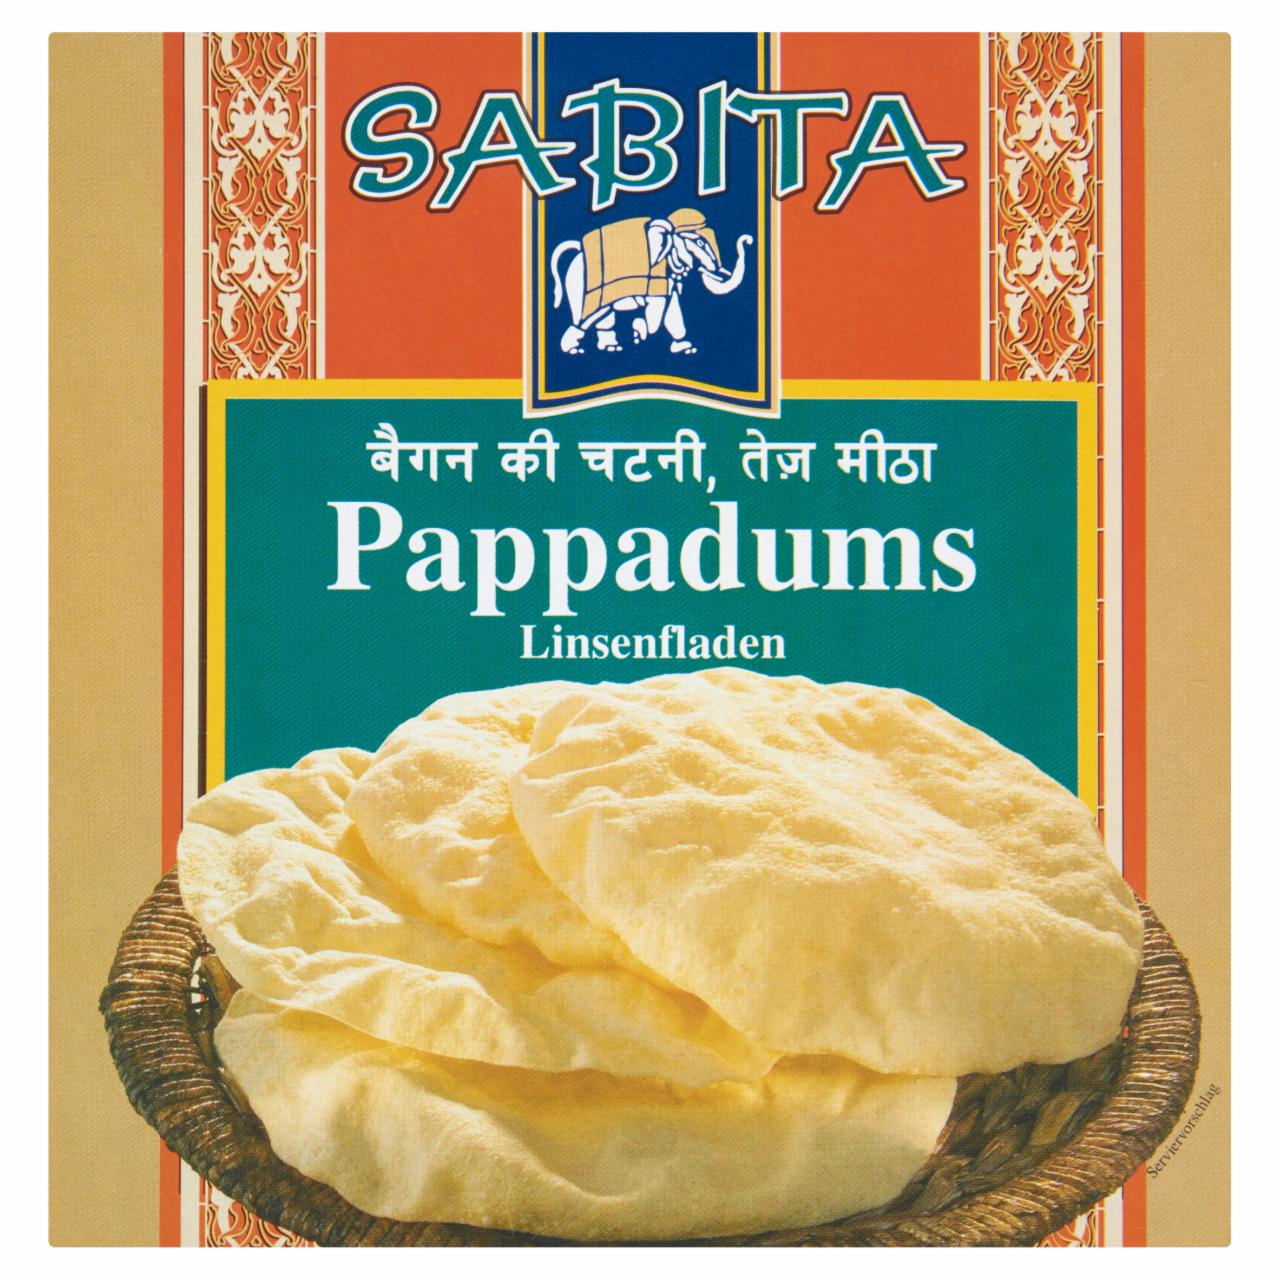 Képek - Sabita indiai kenyér 200g